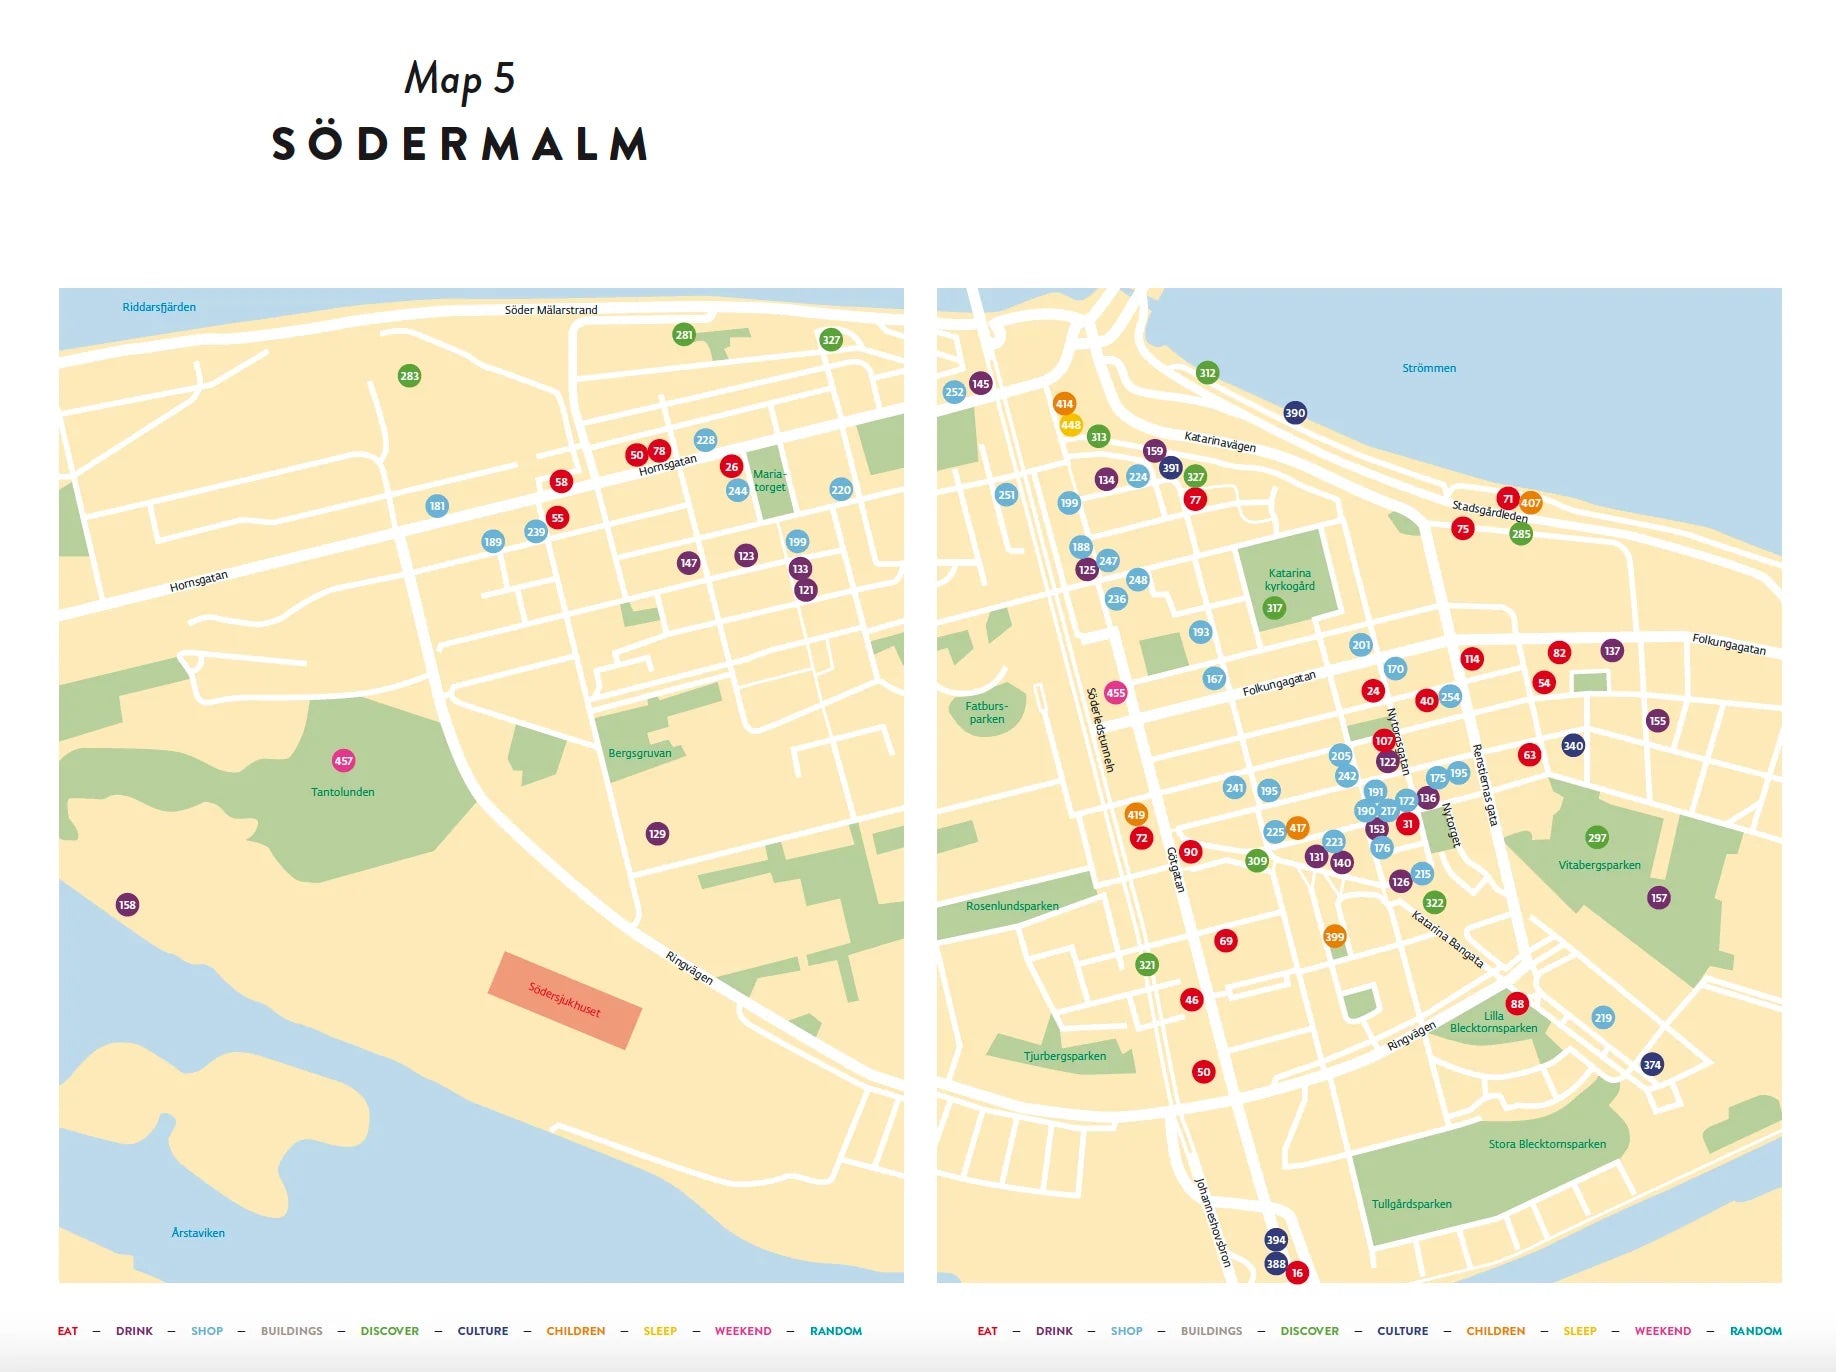 The 500 Hidden Secrets of Stockholm - 3rd edition